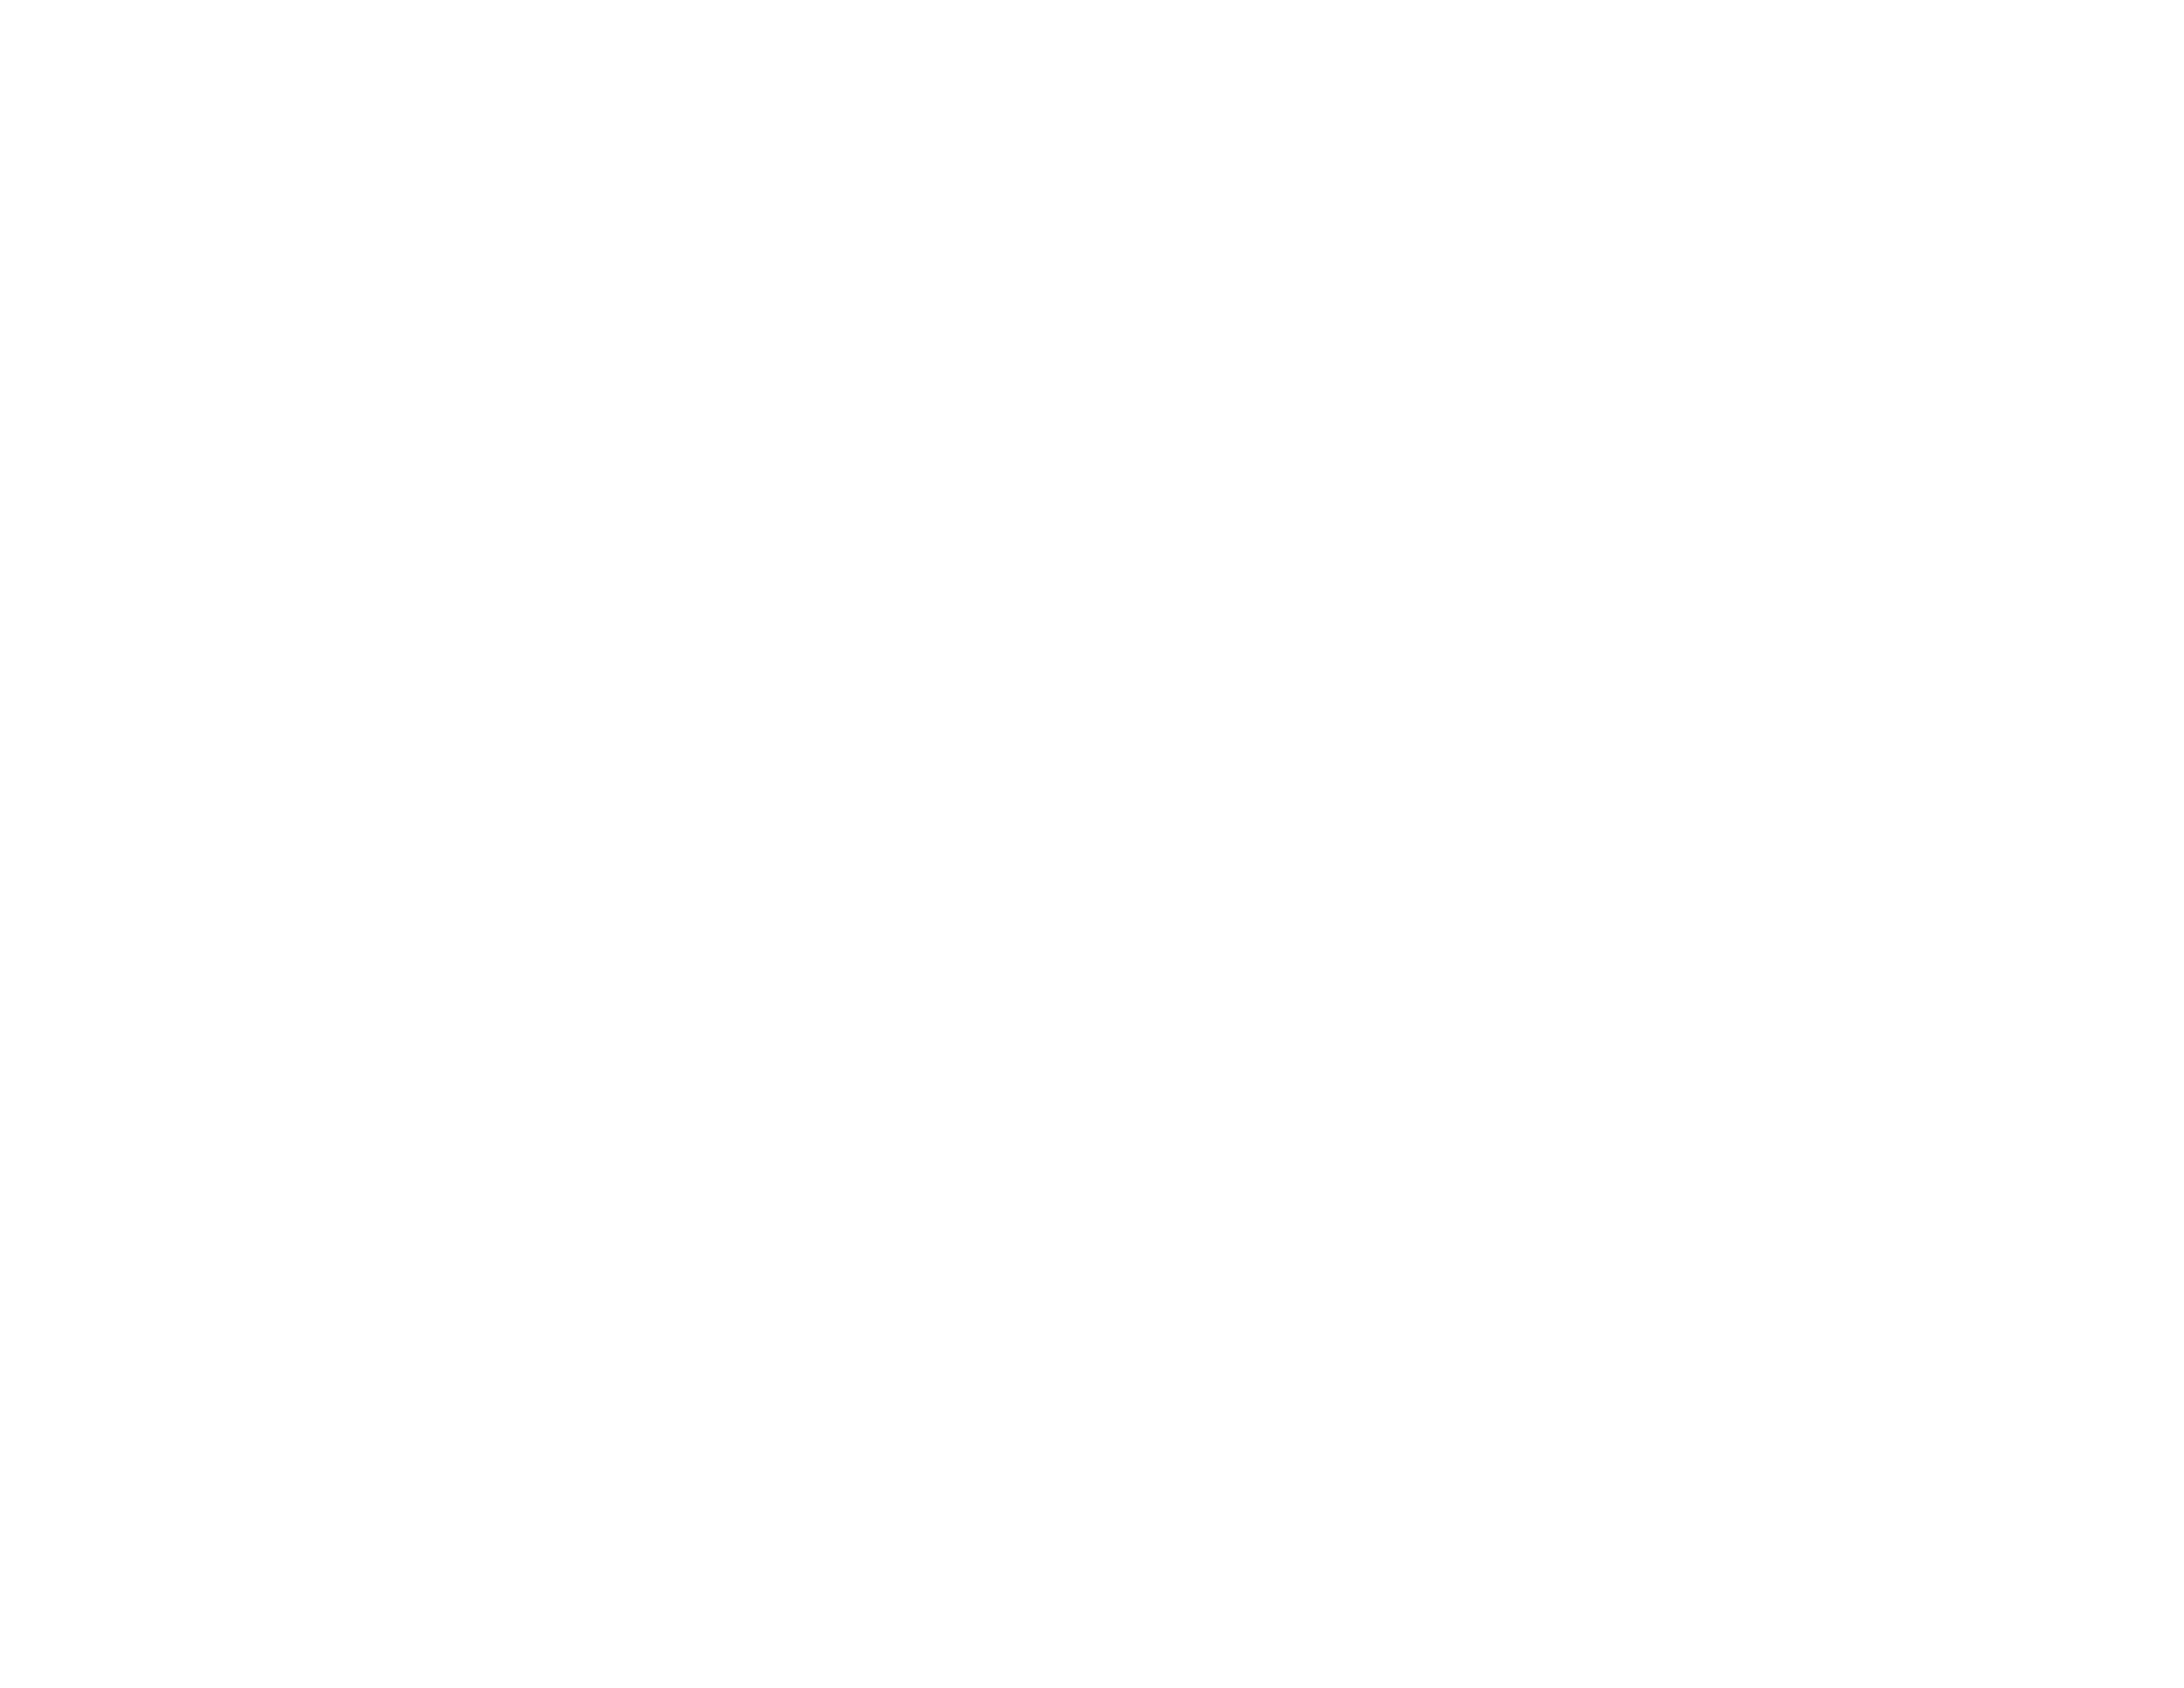 WWS Logo